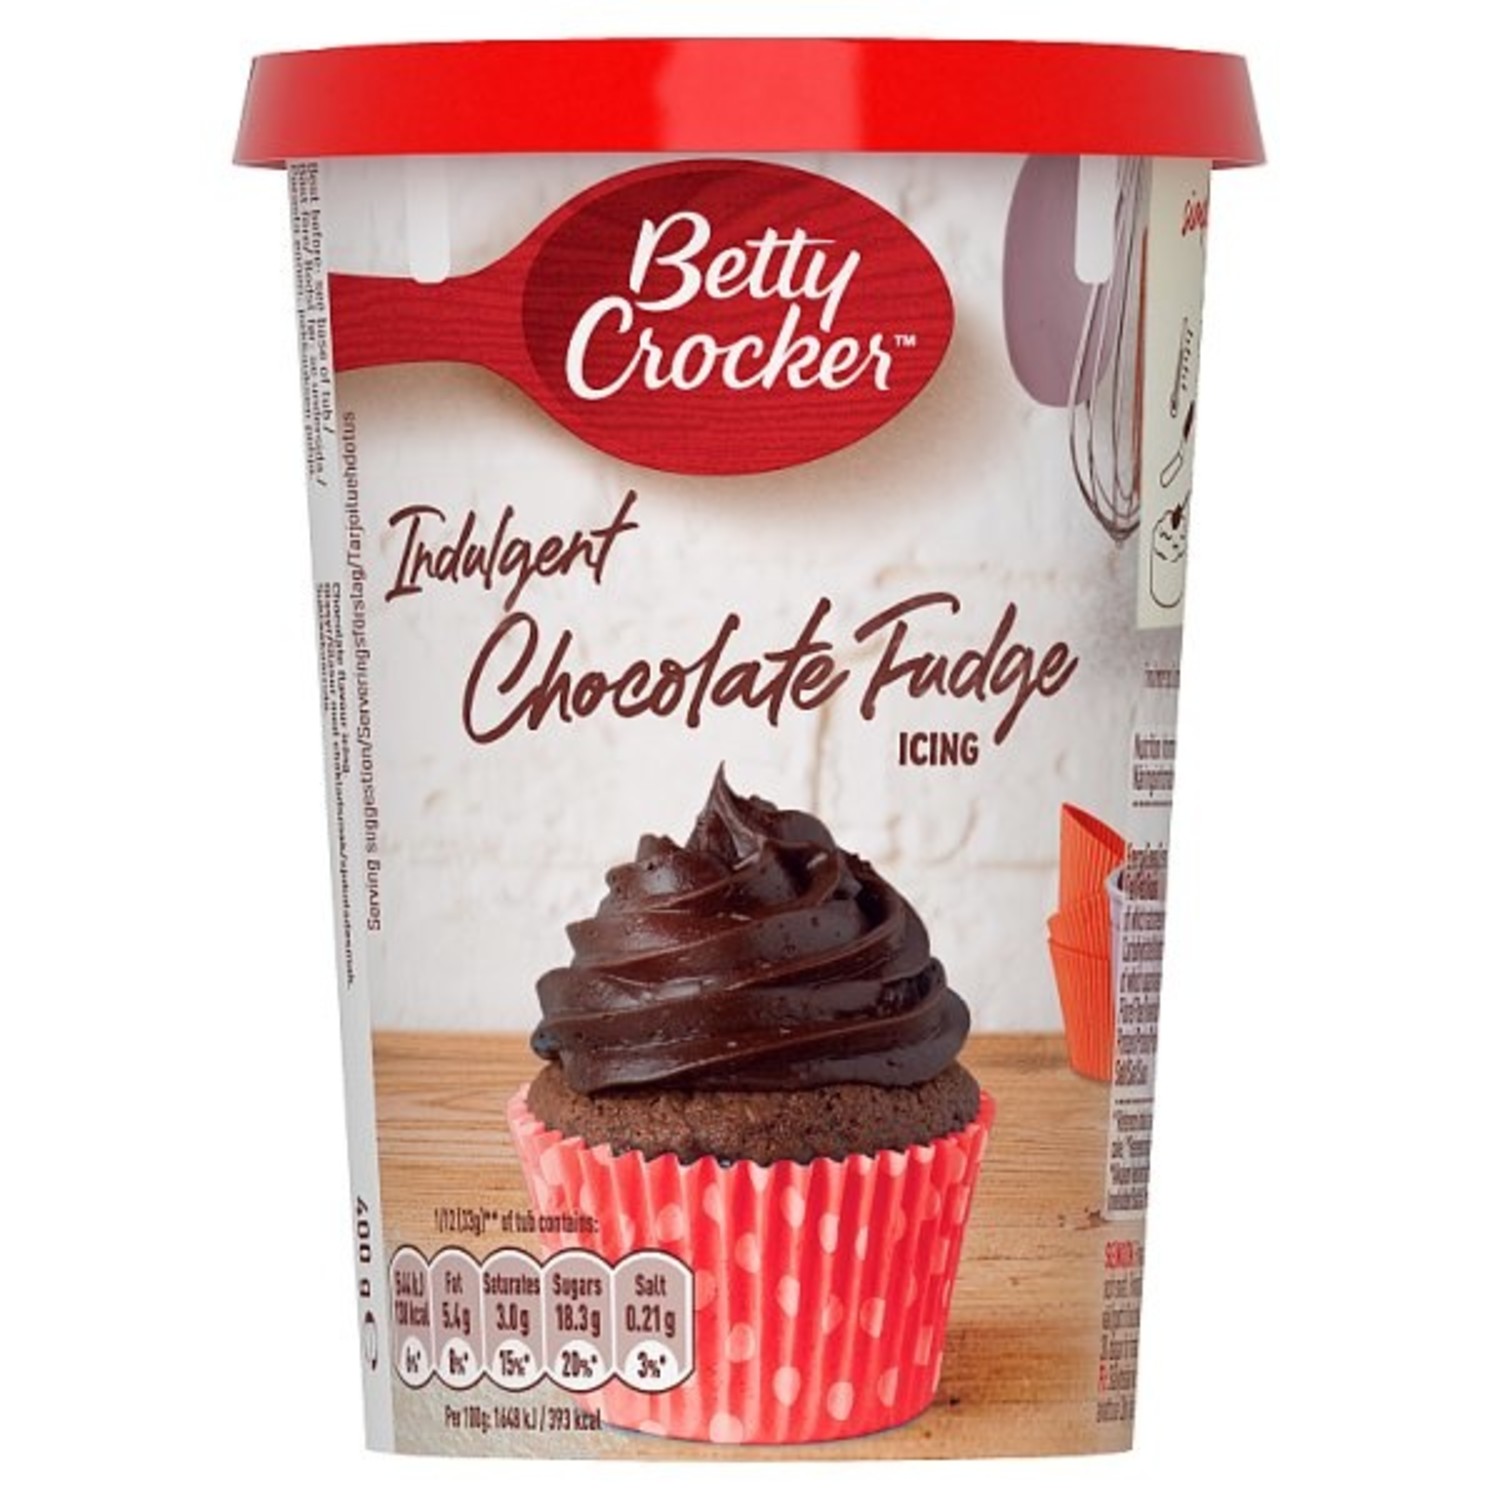 BETTY CROCKER CHOCOLATE FUDGE ICING